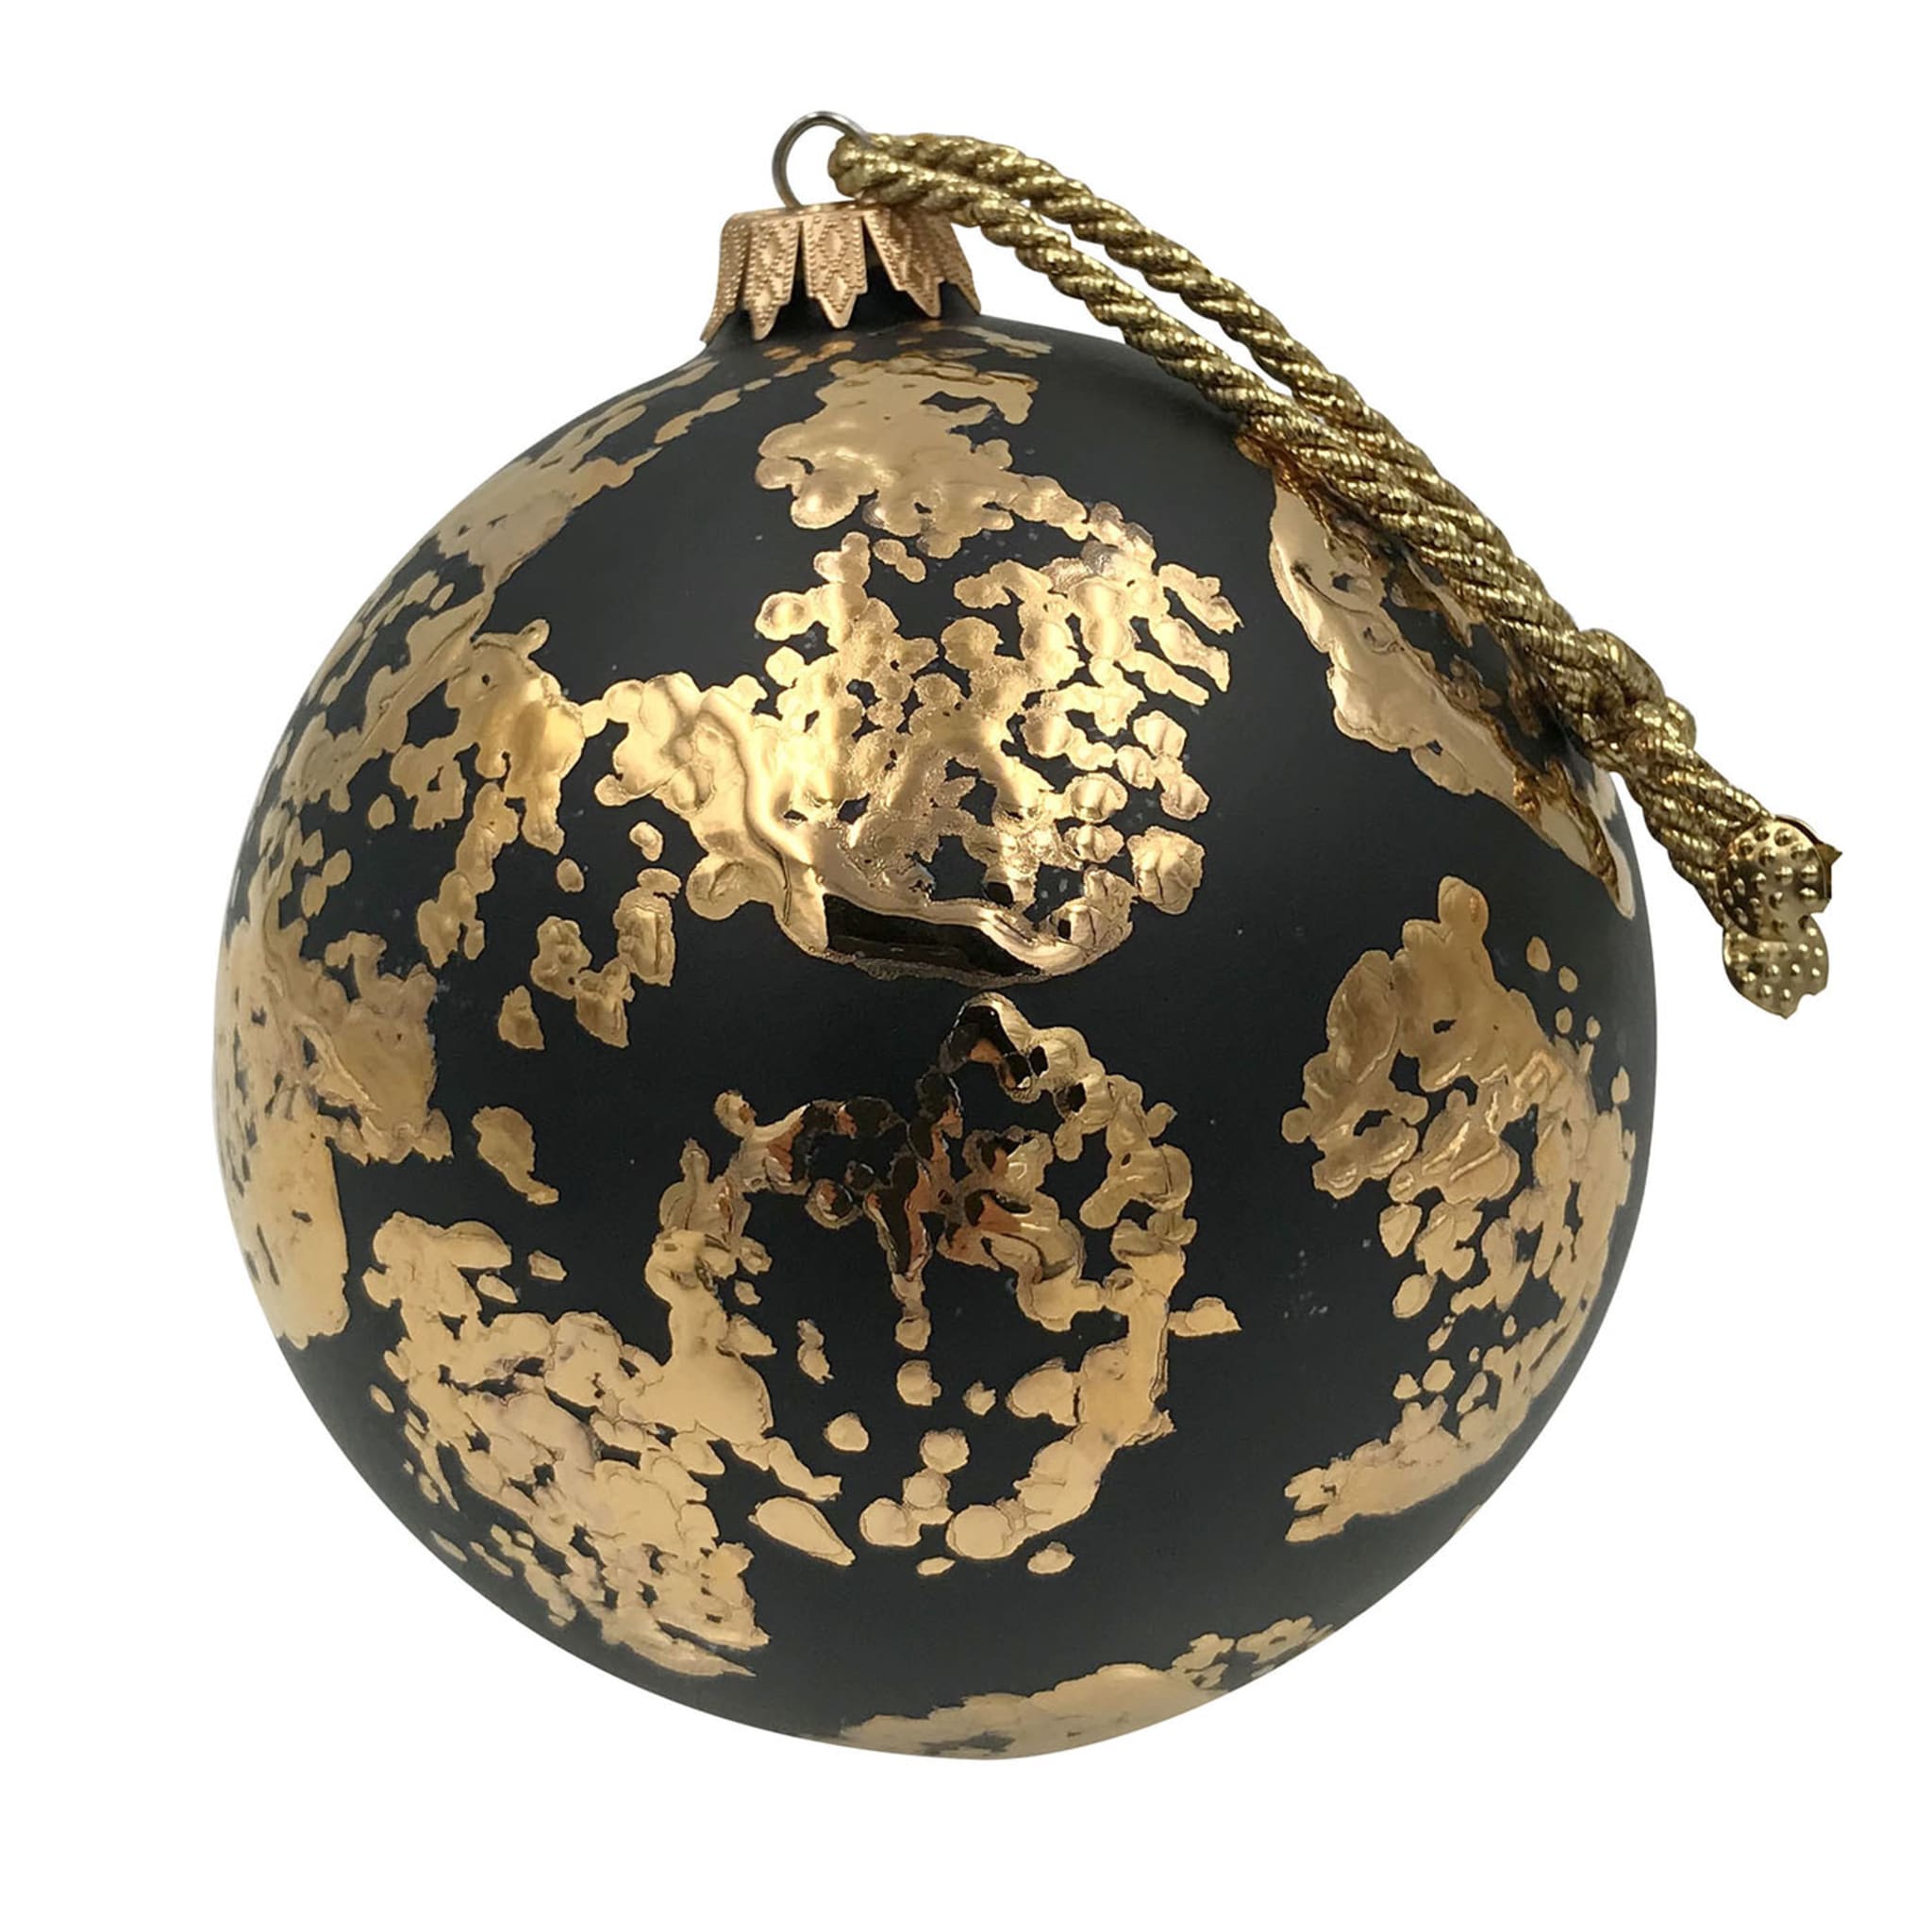 Foglie Ceramic Christmas Ornament Black and Gold - Main view